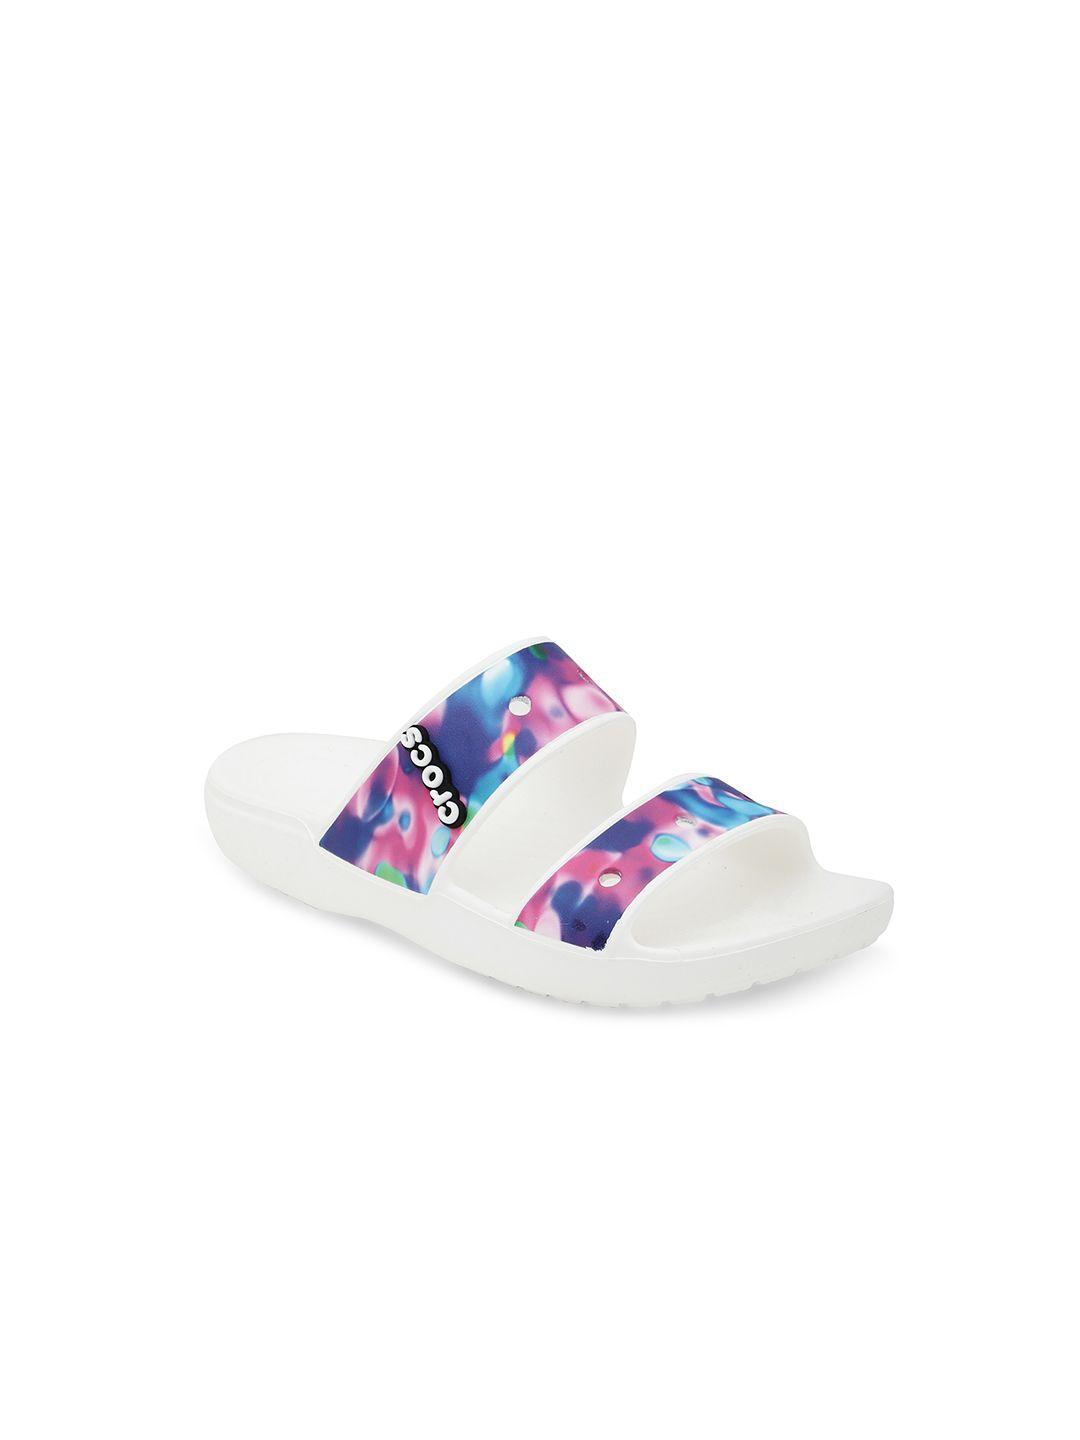 crocs unisex white & pink comfort sandals